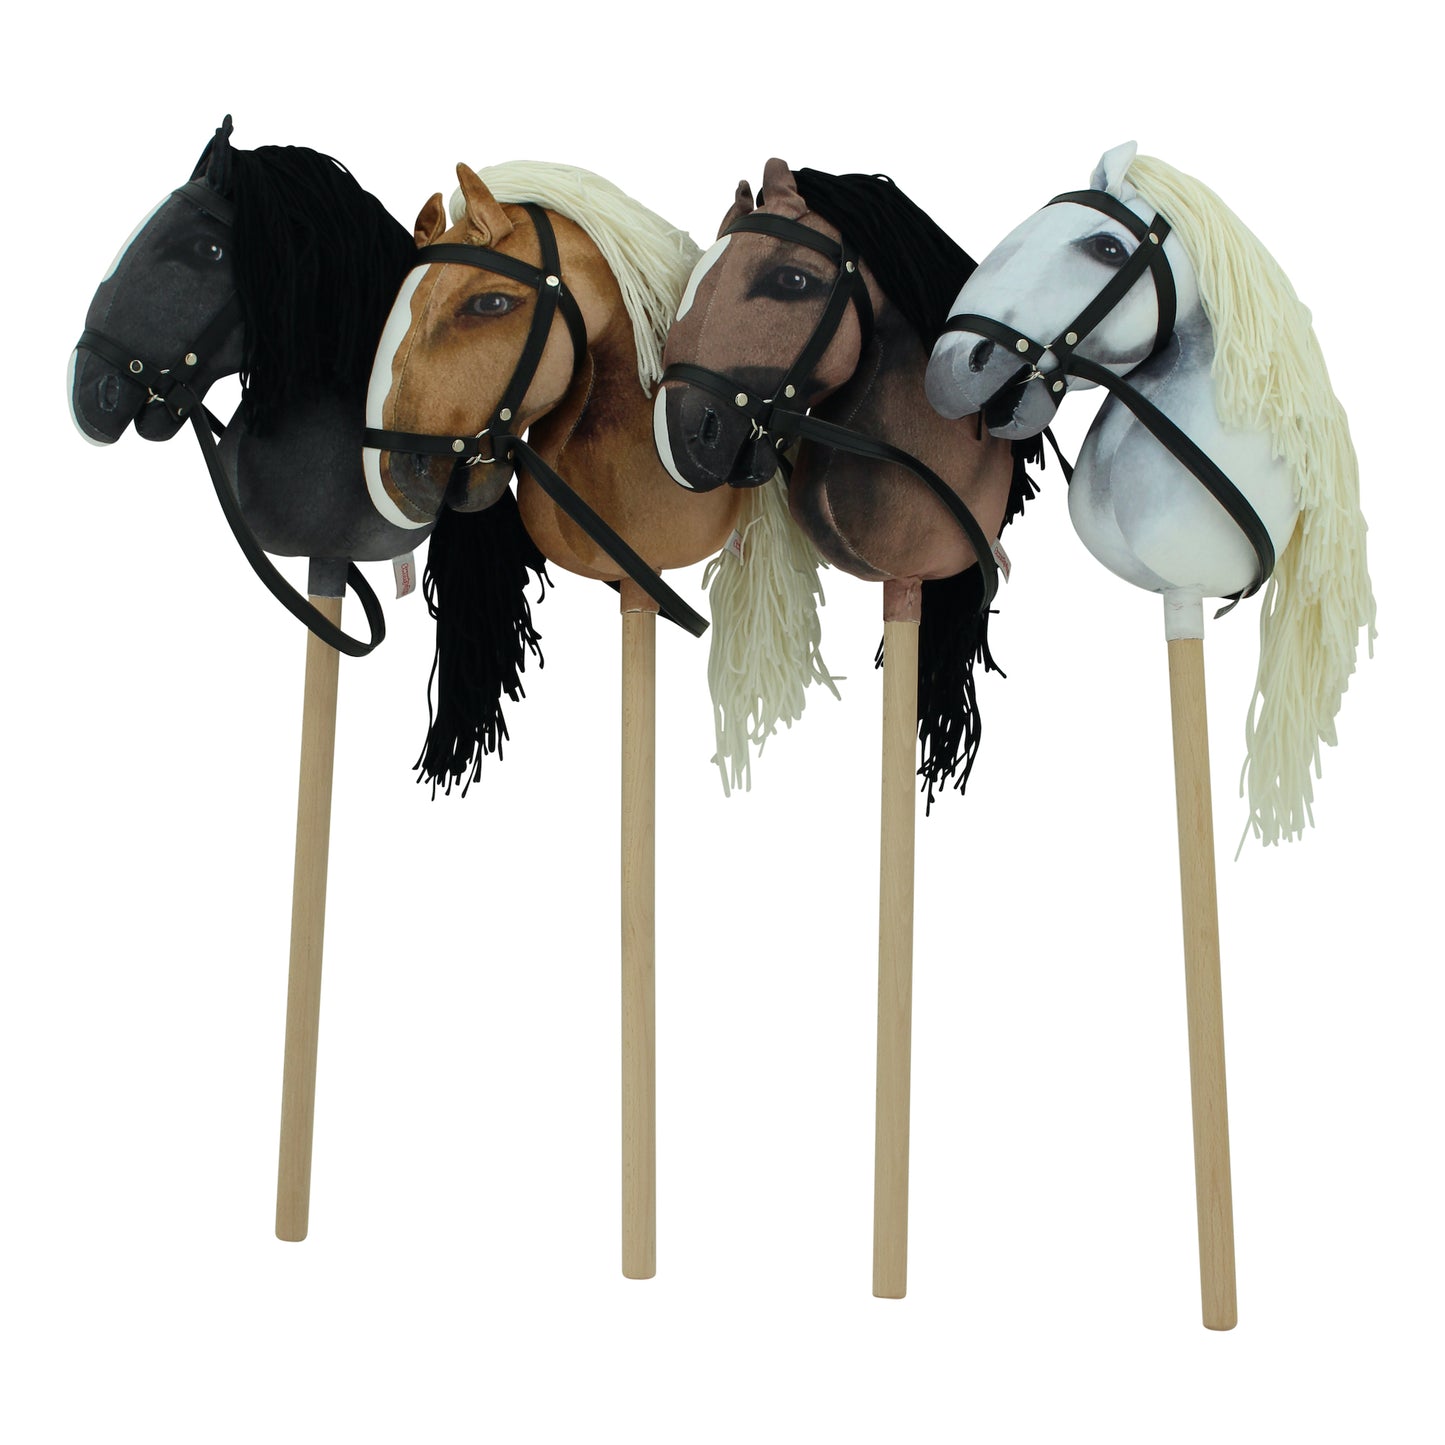 Sweety Toys 14248 Hobbyhorse Hobby horse senza ruote adatto per tornei di hobbistica